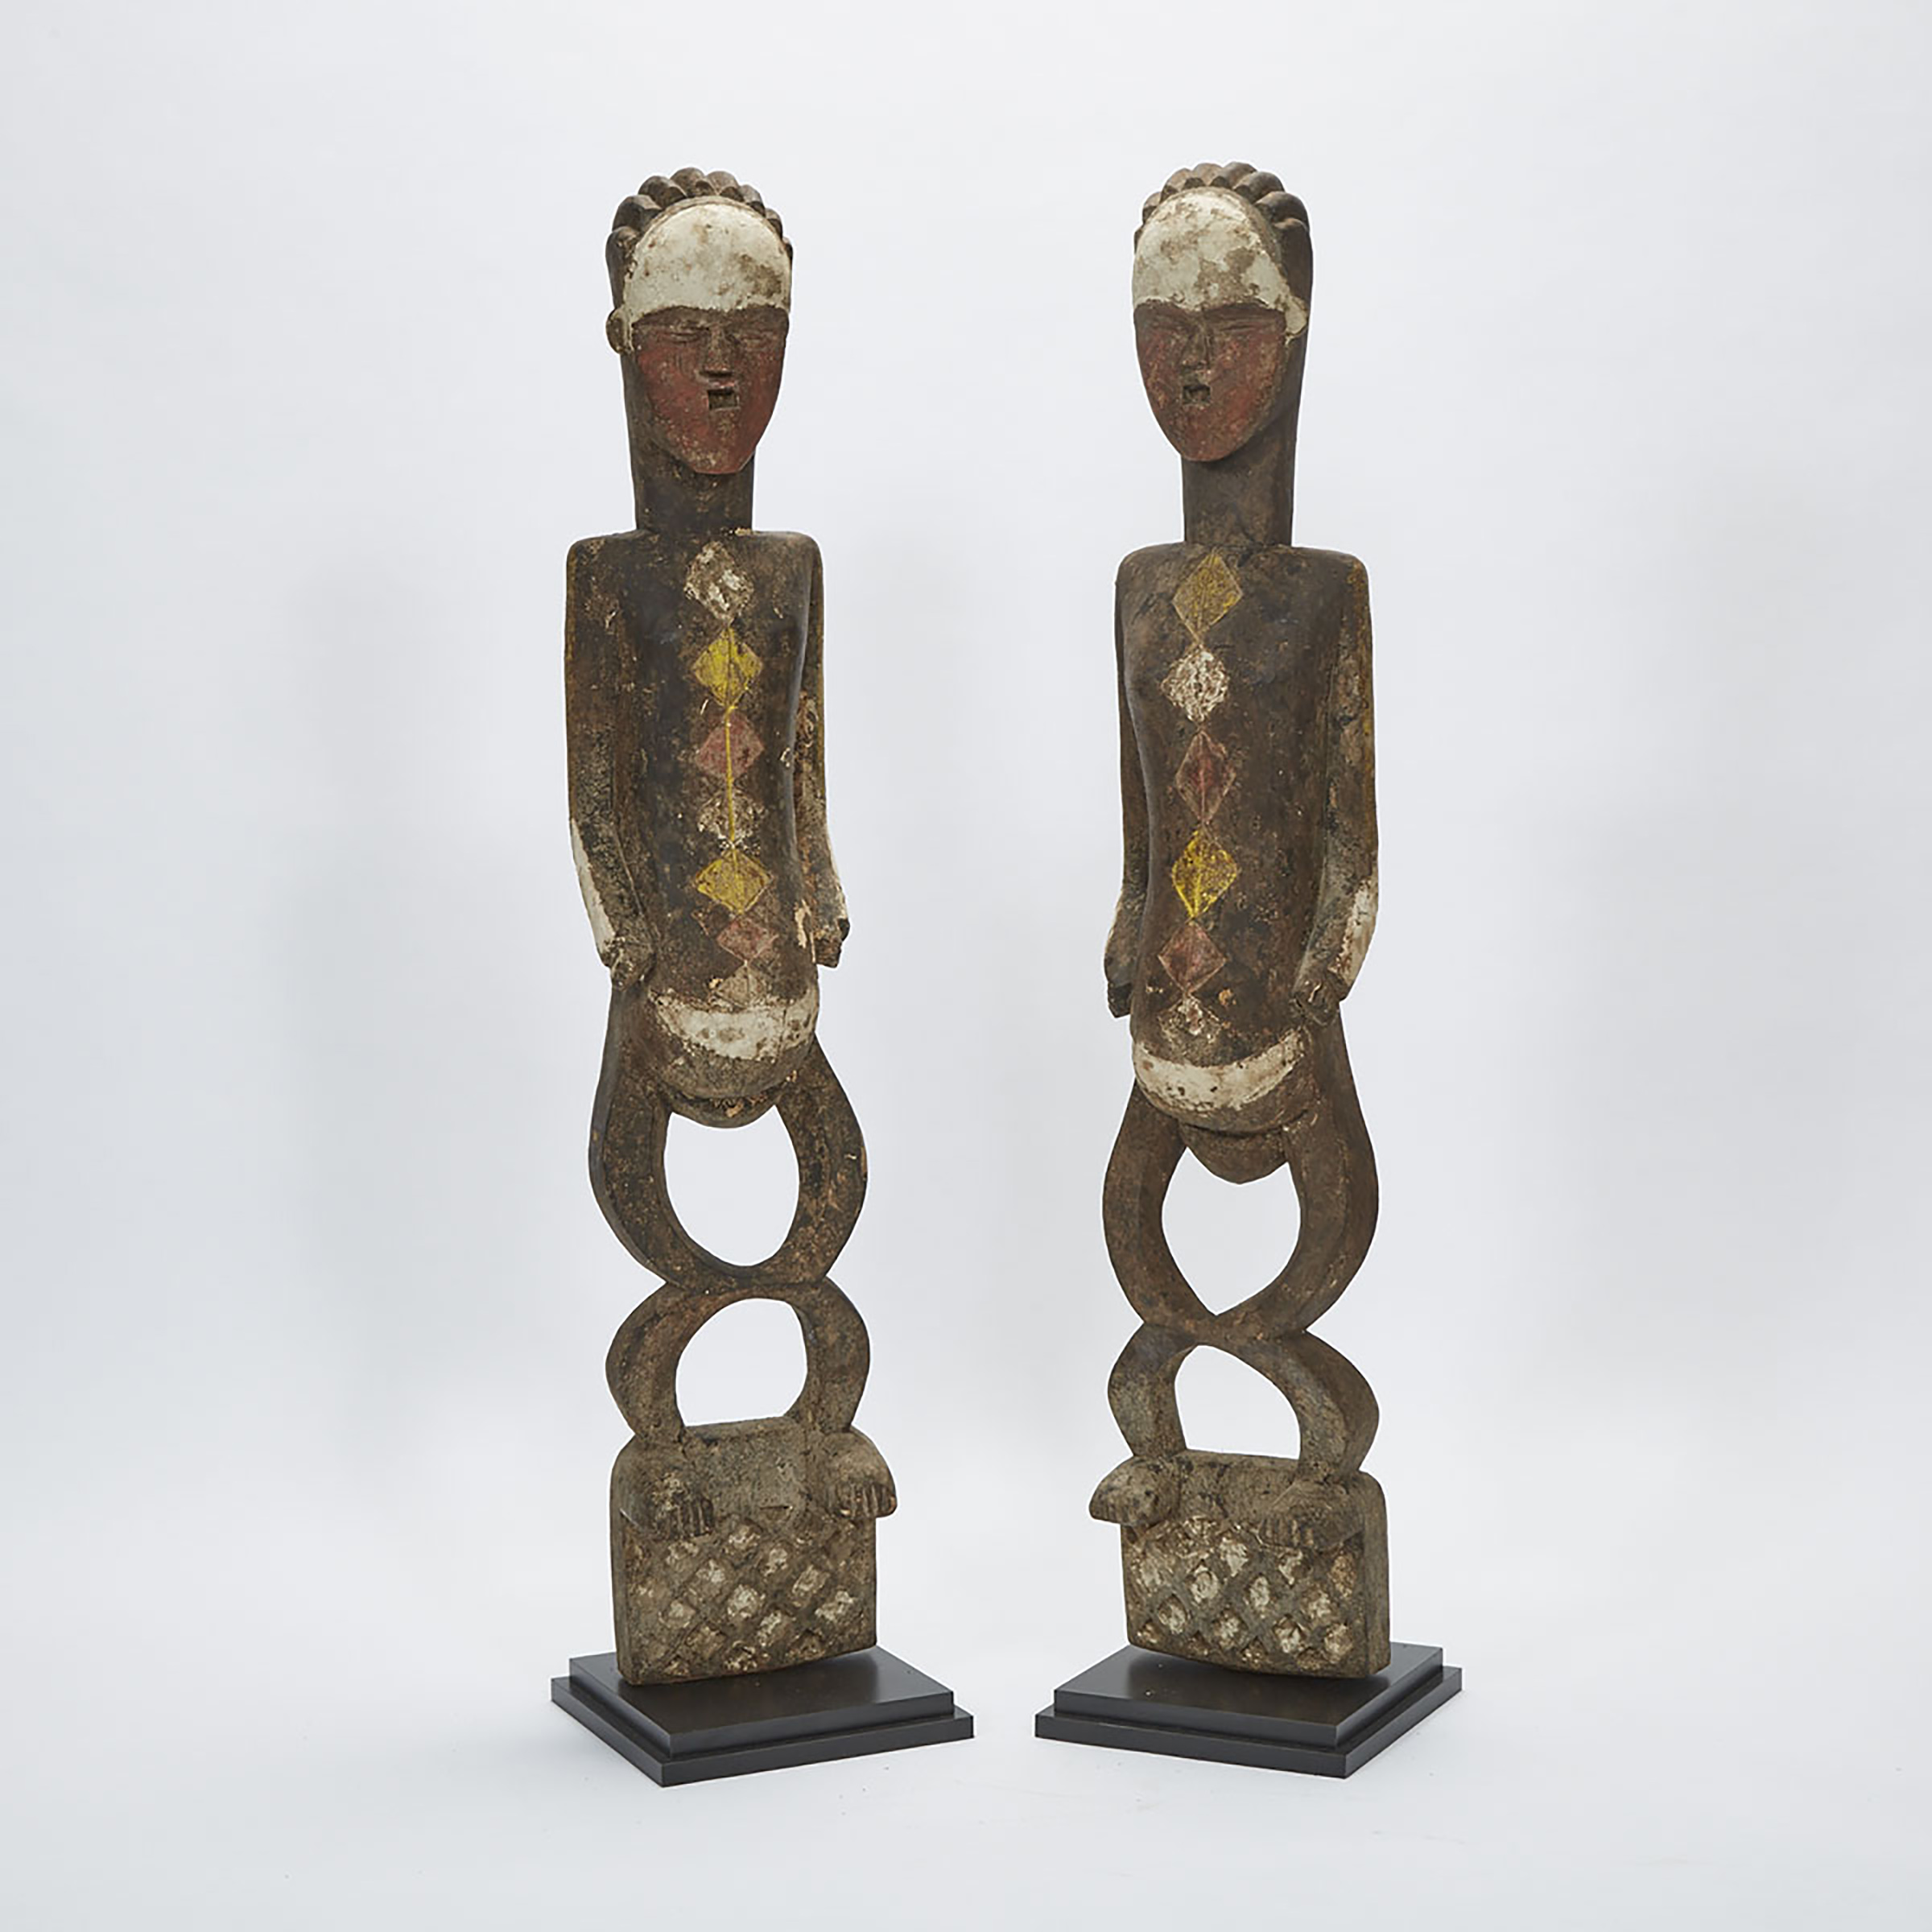 A Pair of Tsogho/ Vuvi Female Shrine Figures, Gabon, Central Africa